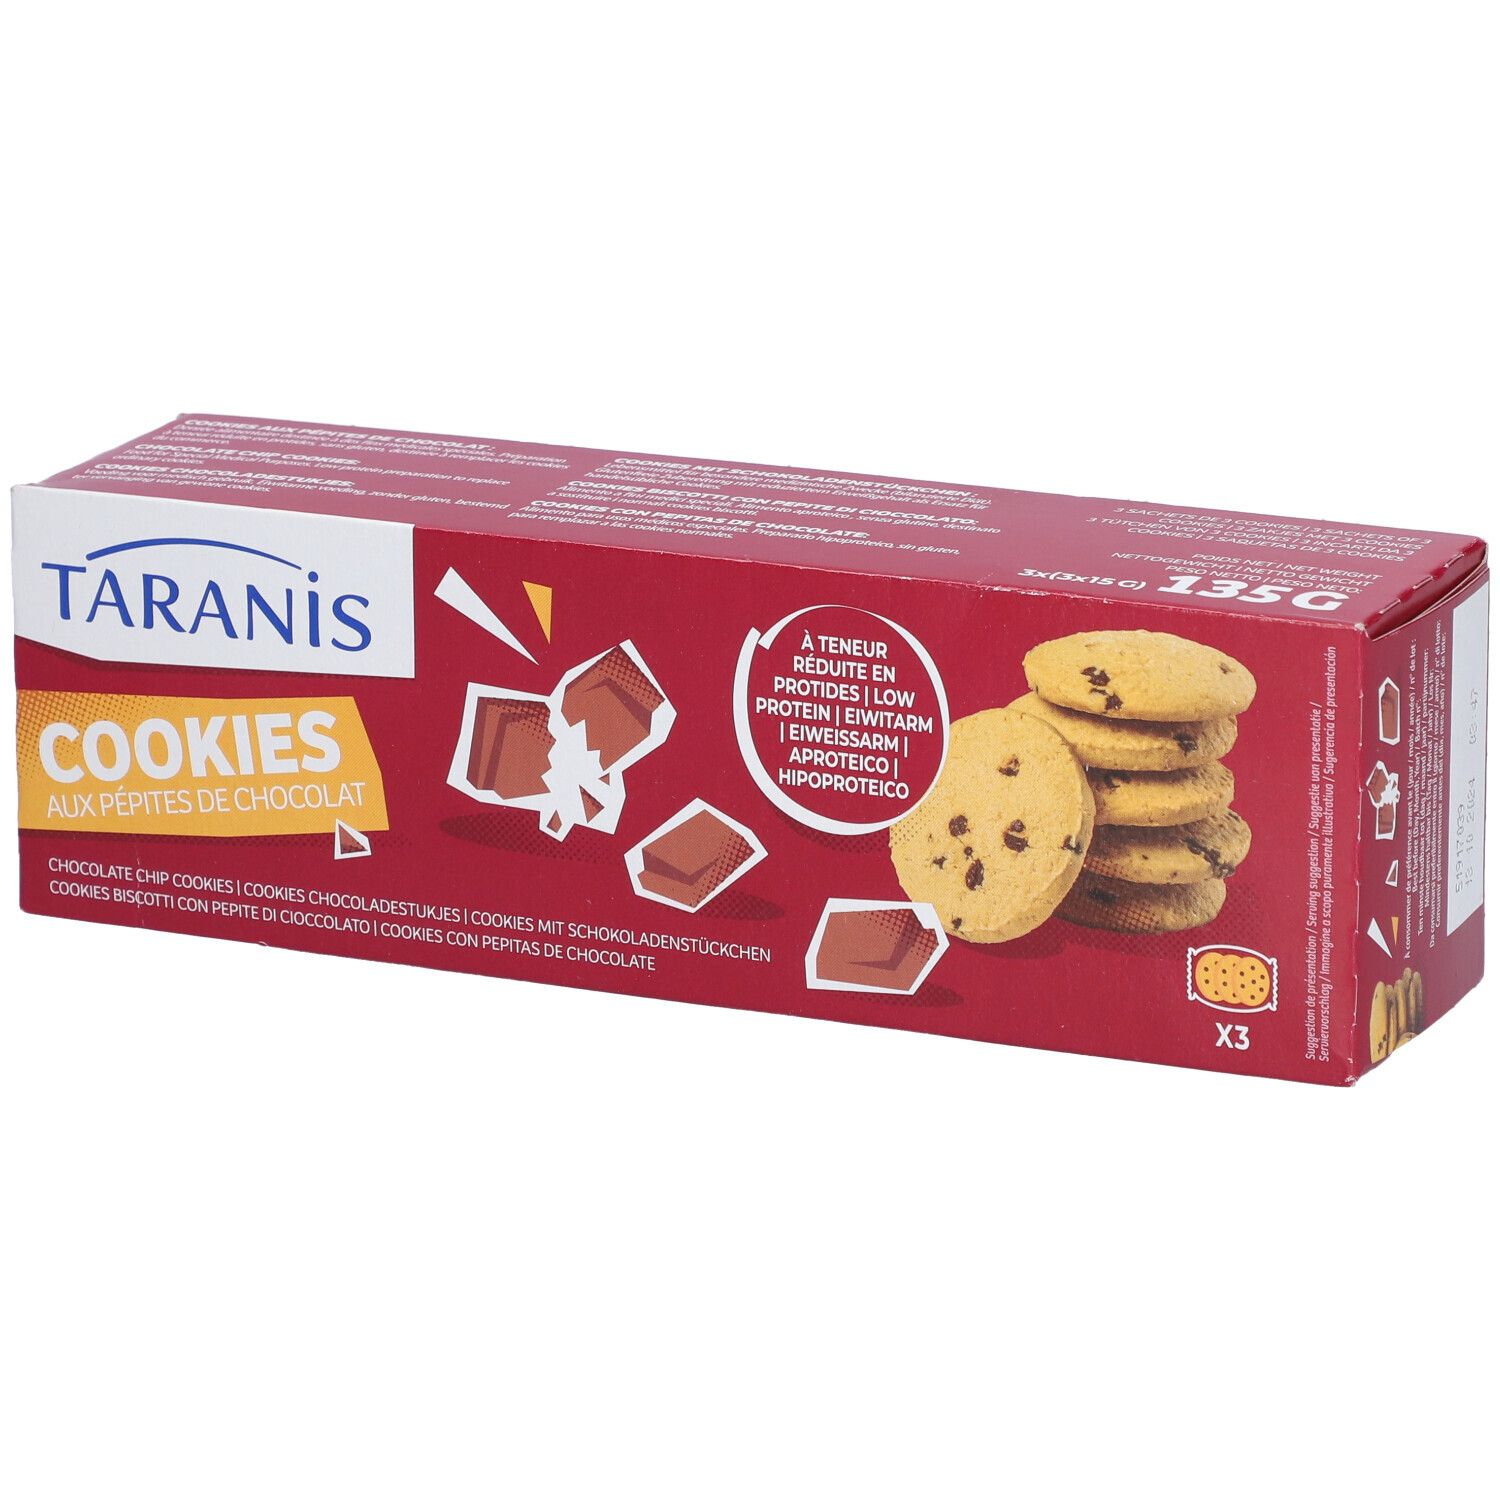 Taranis Cookies pépites de chocolat